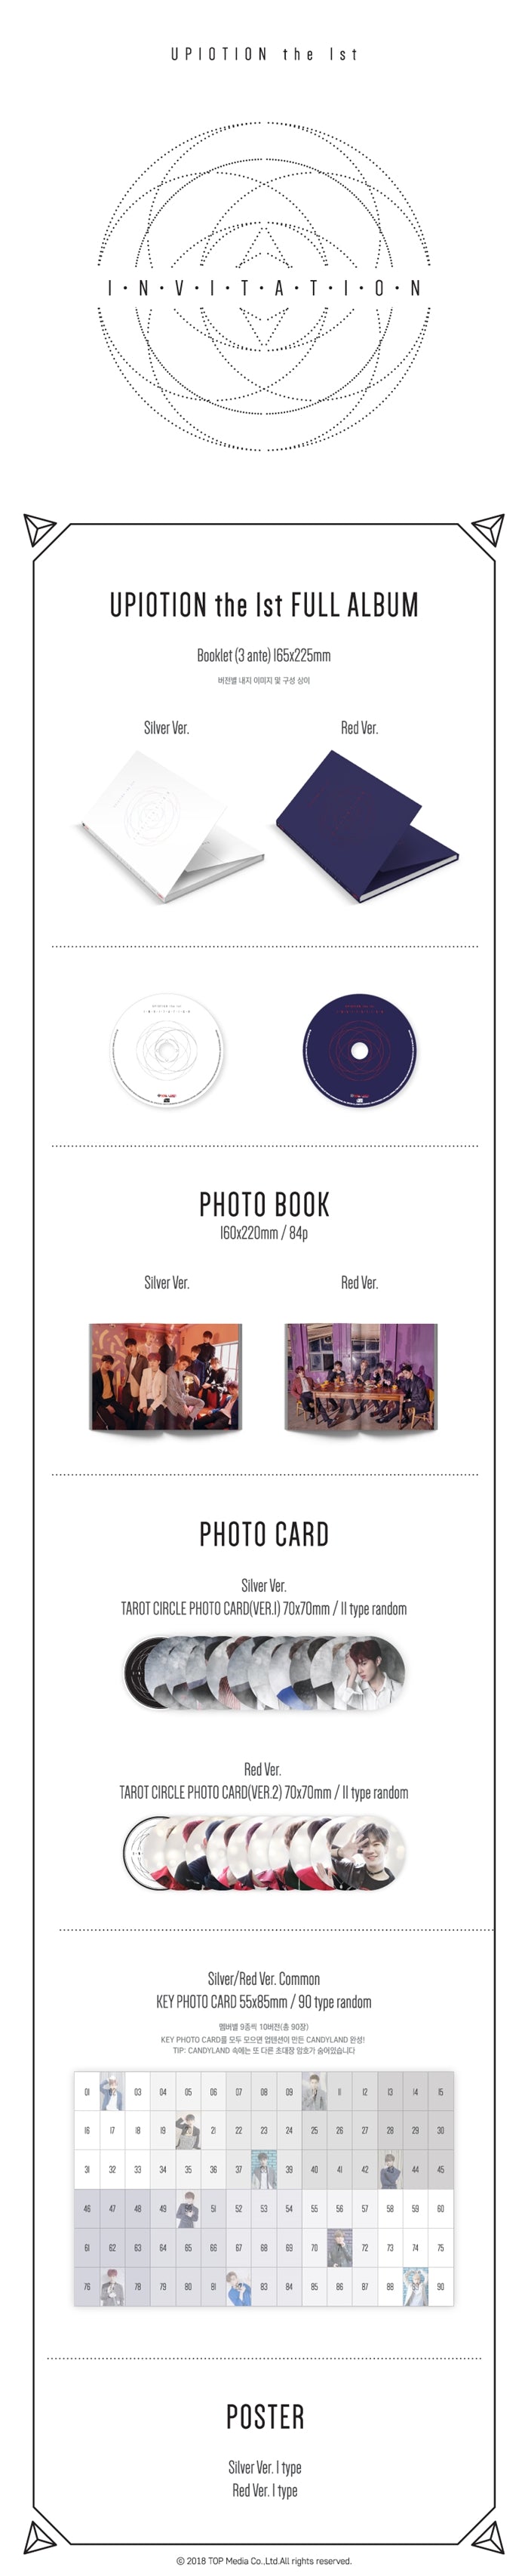 1 CD
1 Booklet
1 Tarot Card
1 Key Photo Card